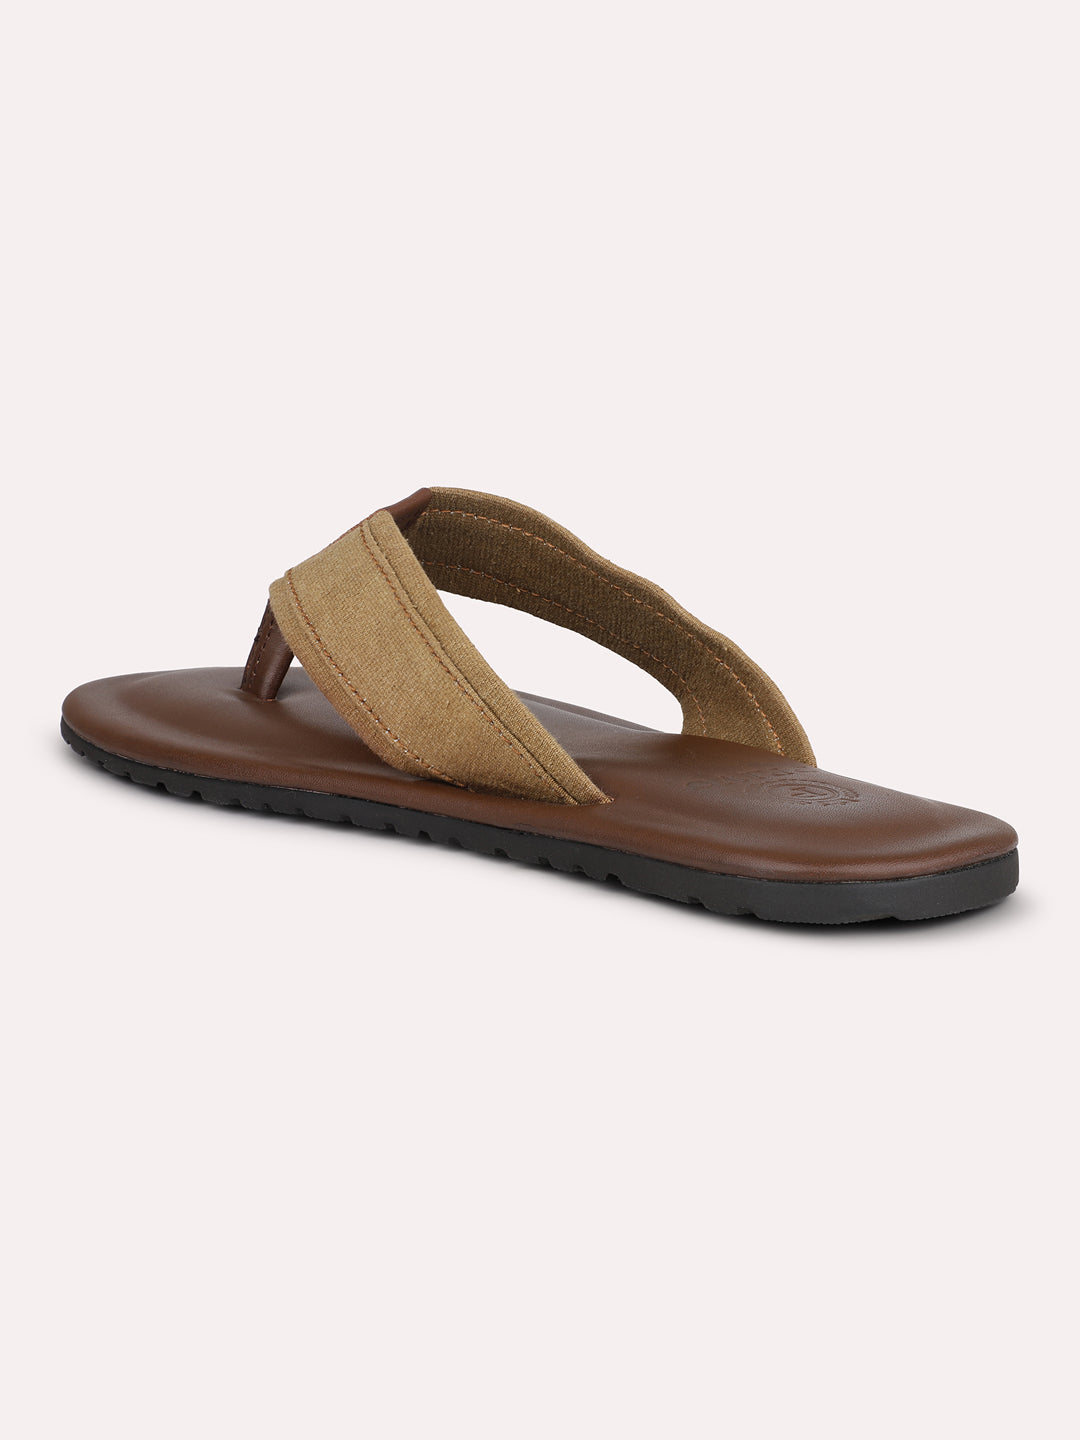 Privo Tan Denim T-strap Casual Sandals For Men